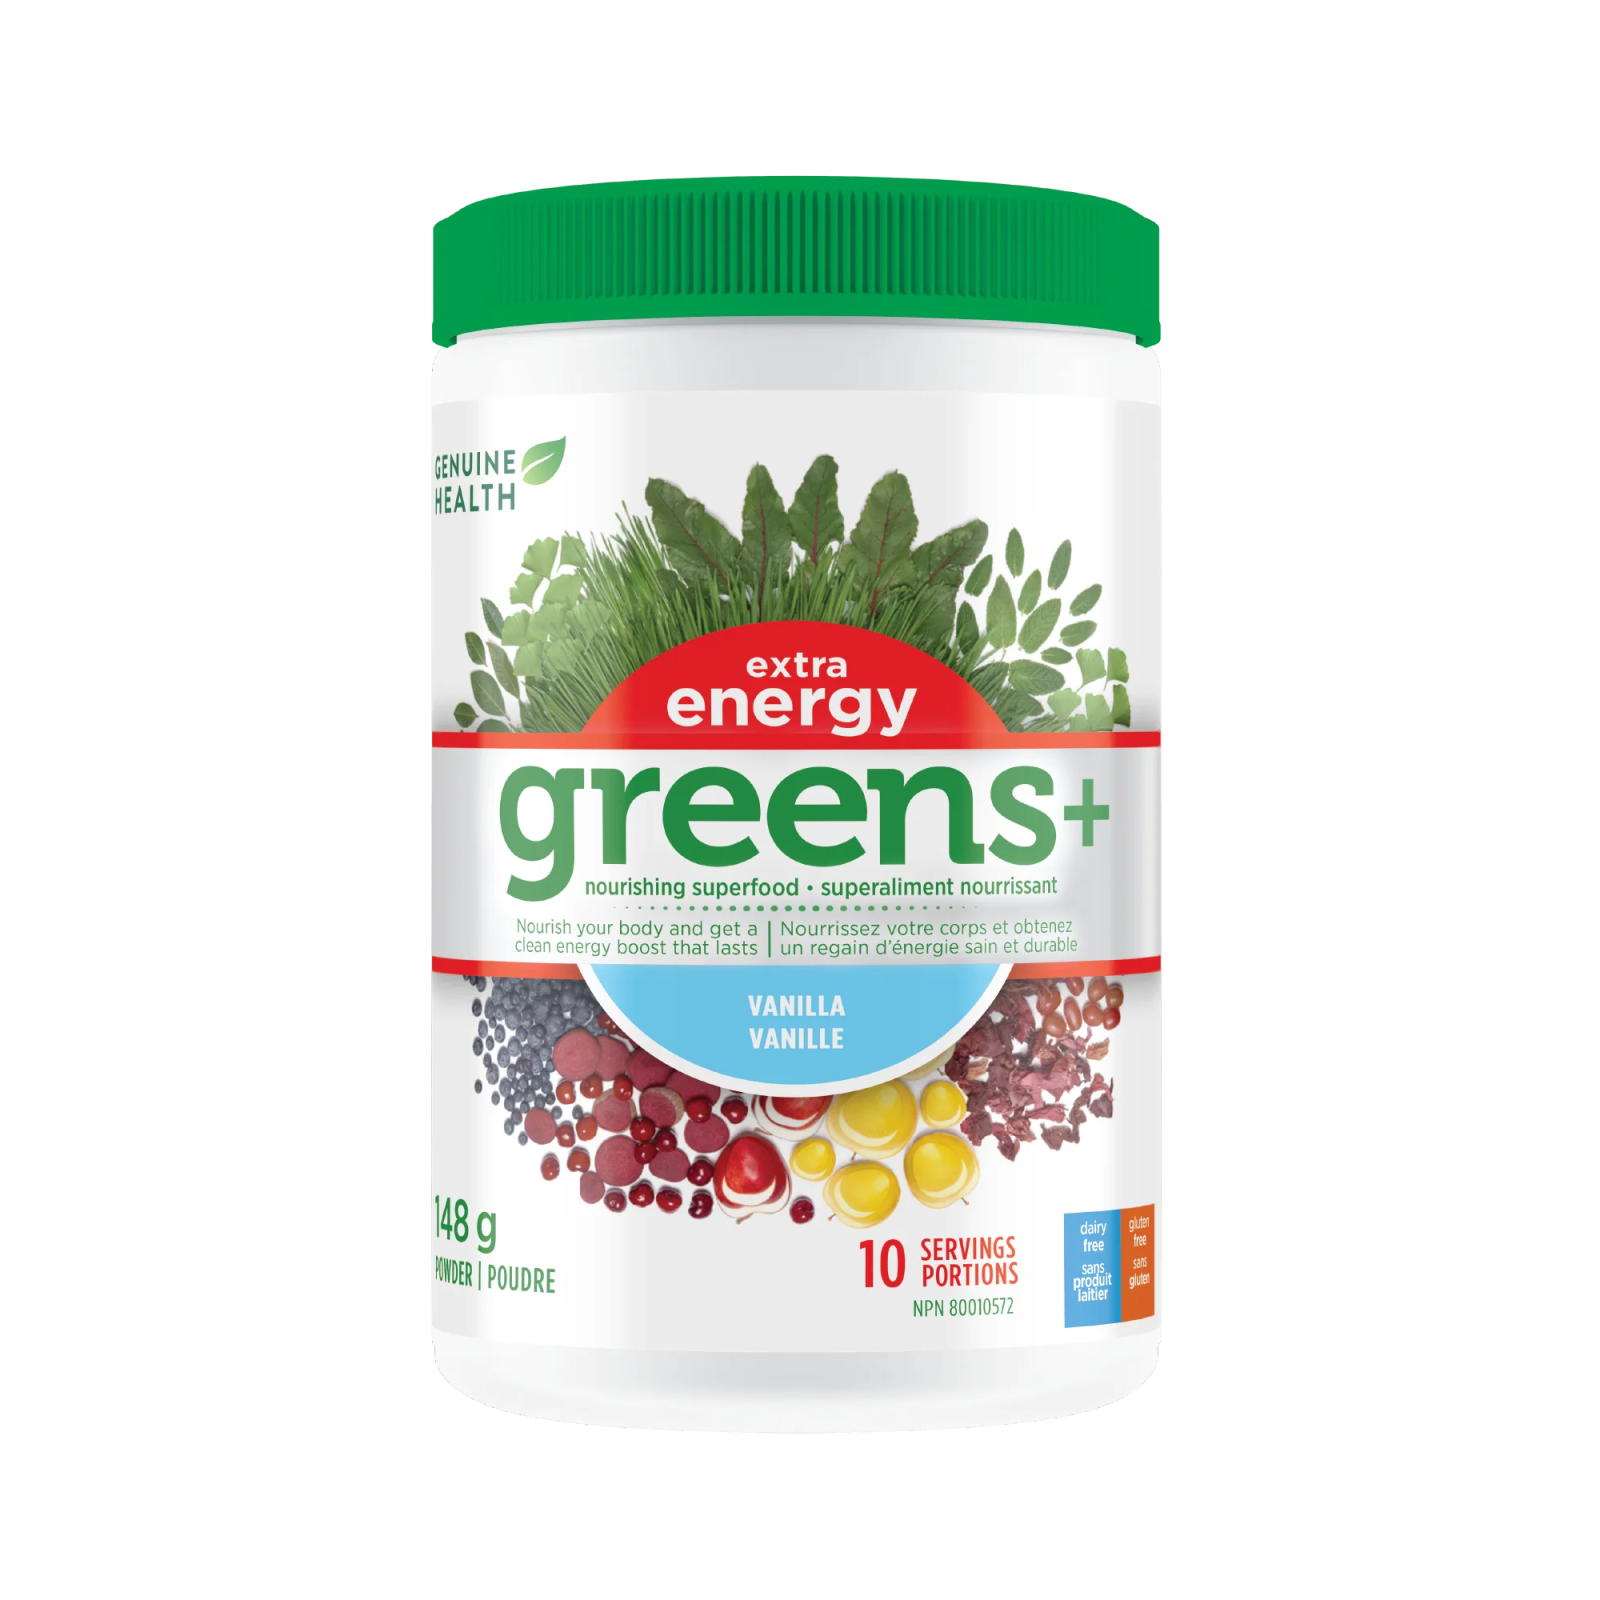 Genuine Health greens+ extra energy vanilla (148g)